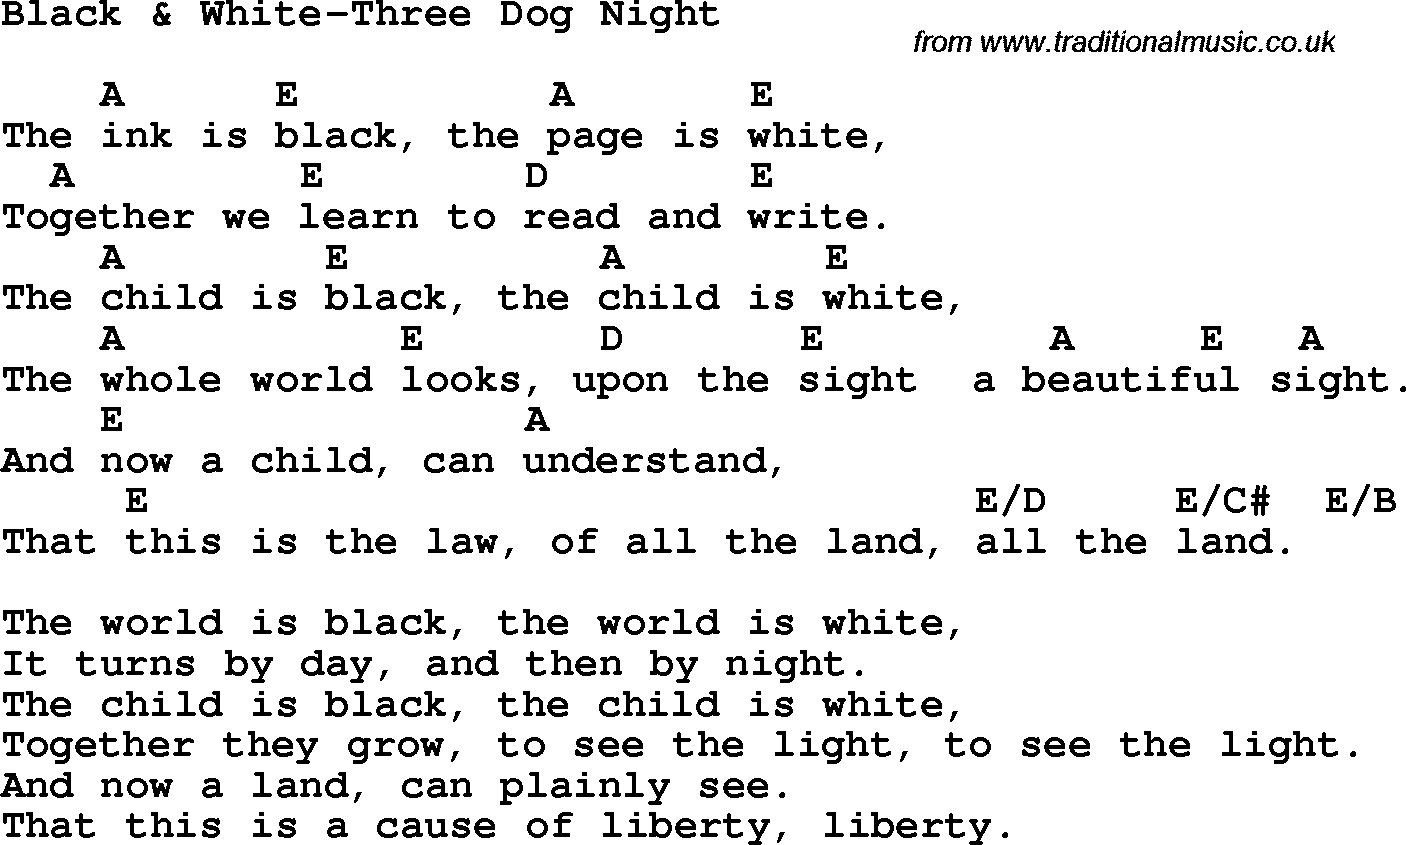 Protest song: Black & White-Three Dog Night lyrics and chords"